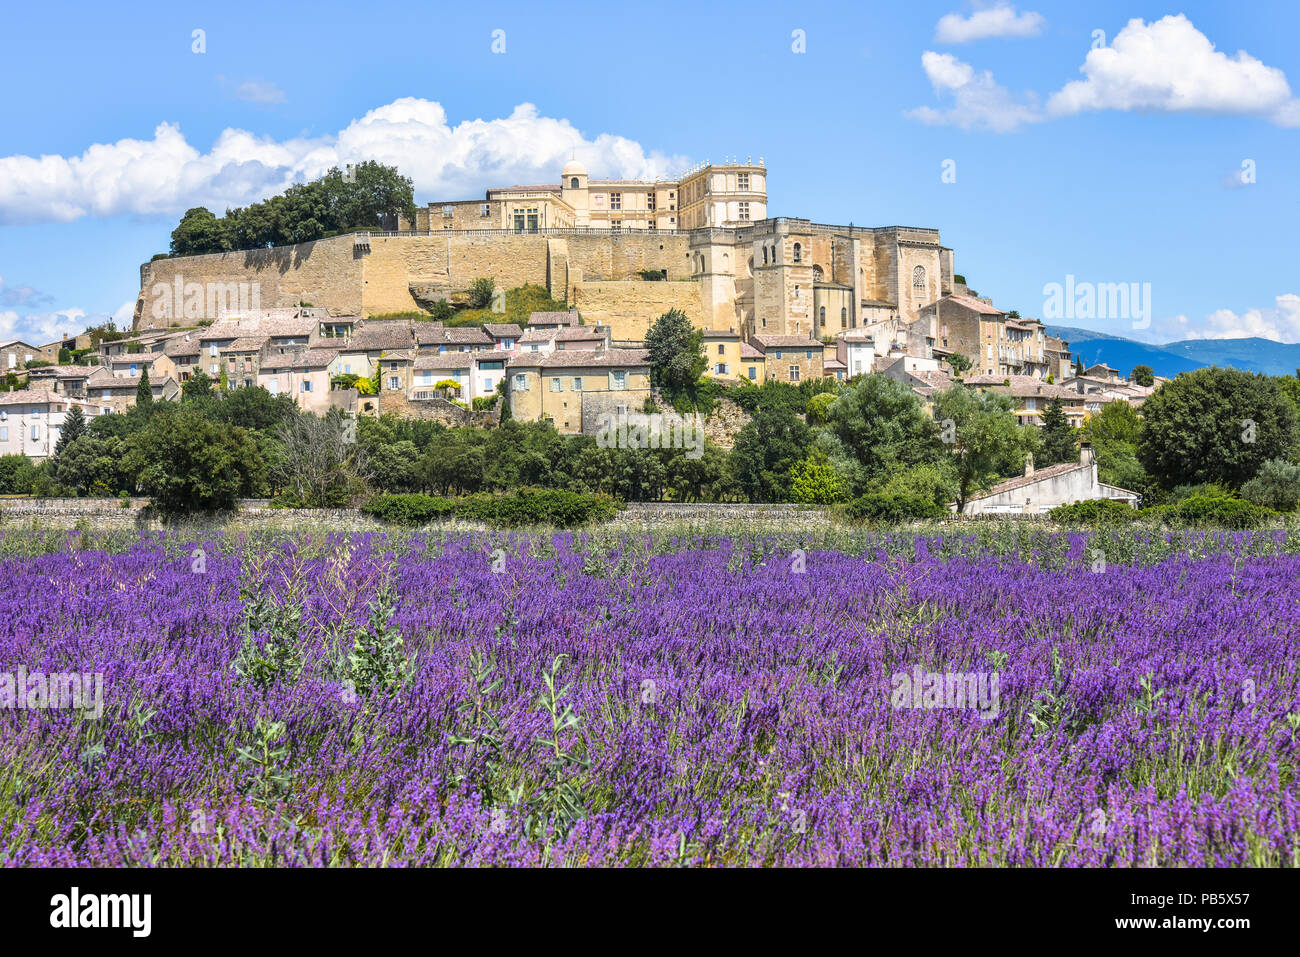 village Grignan situated on a hill with lavender, Provence, France, village with castle Château de Grignan, in Drôme department, region Auvergne-Rhône Stock Photo